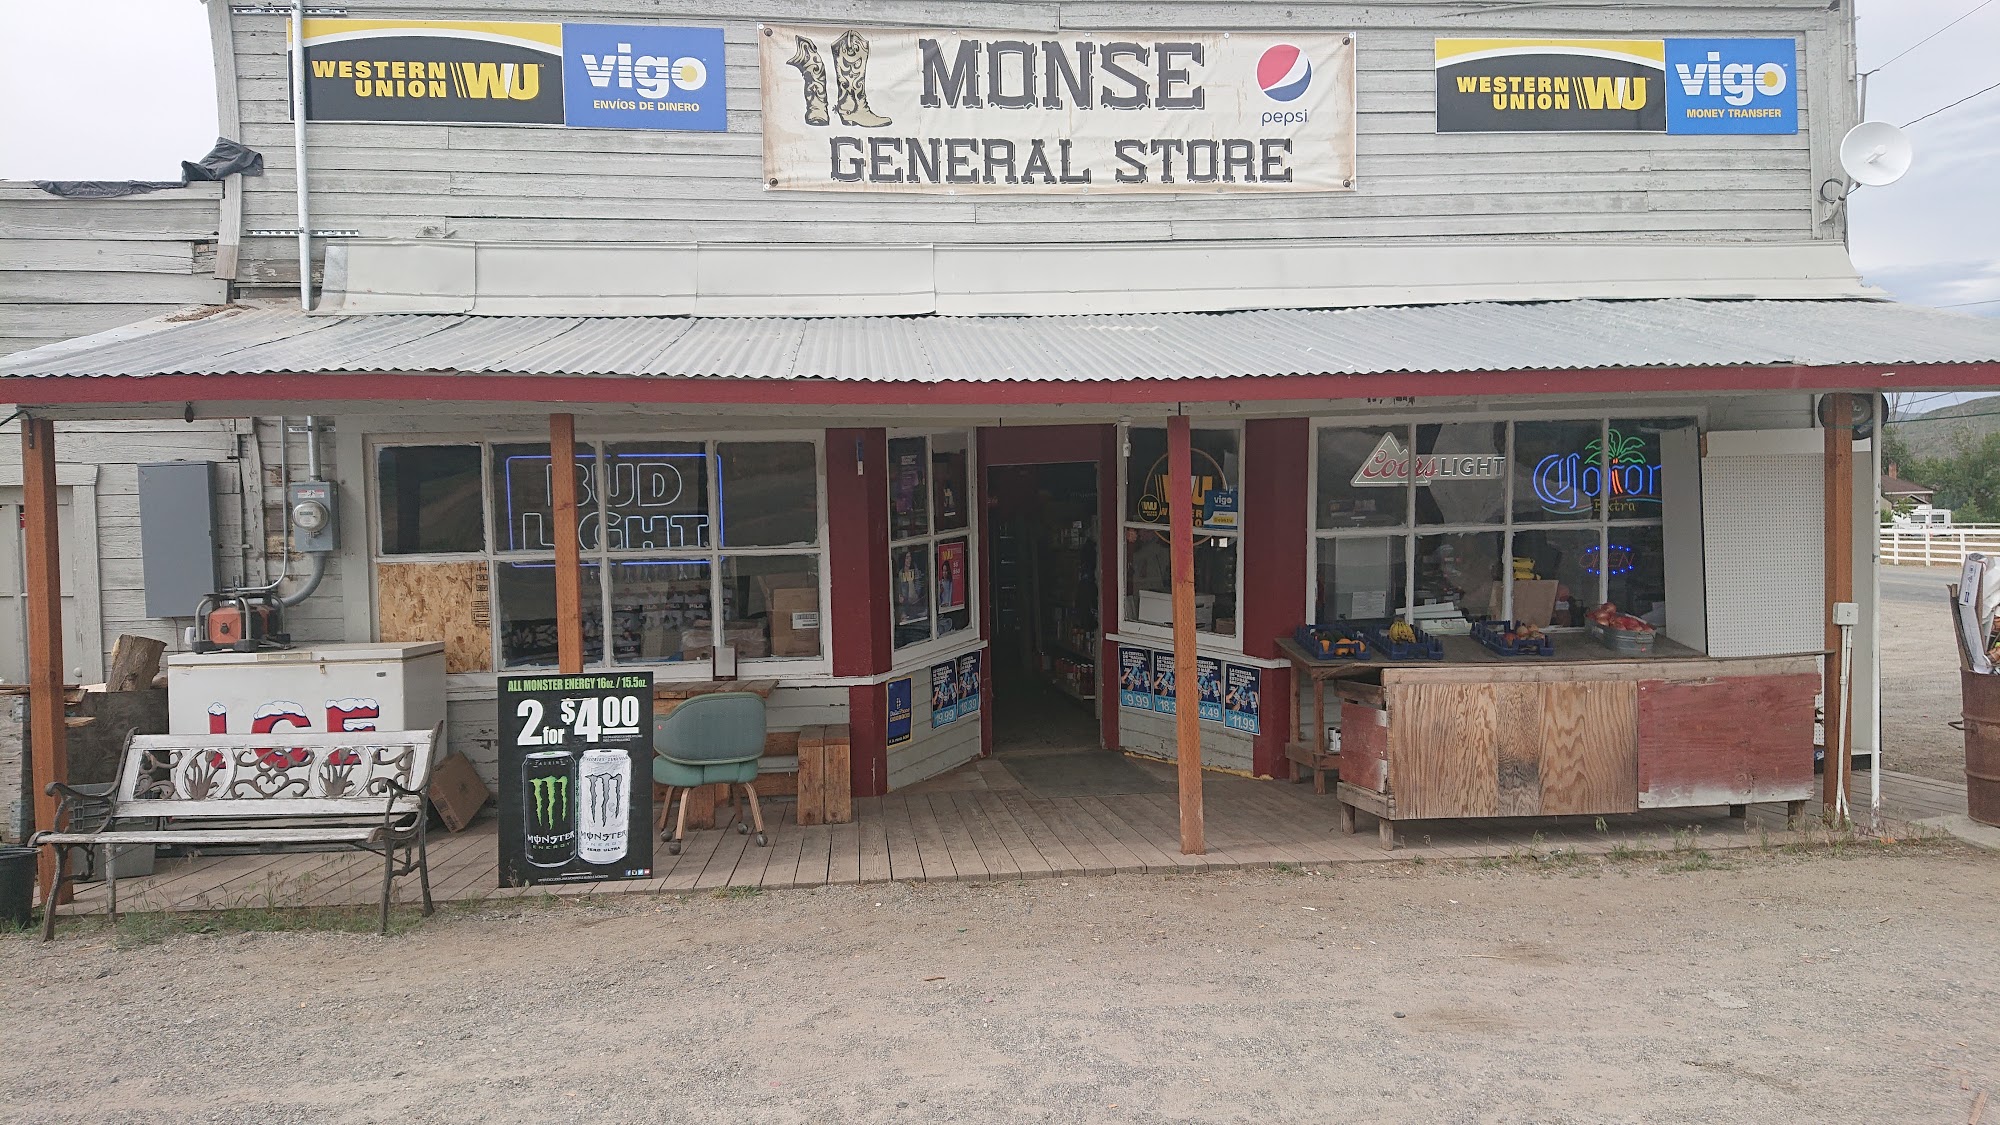 Monse General Store